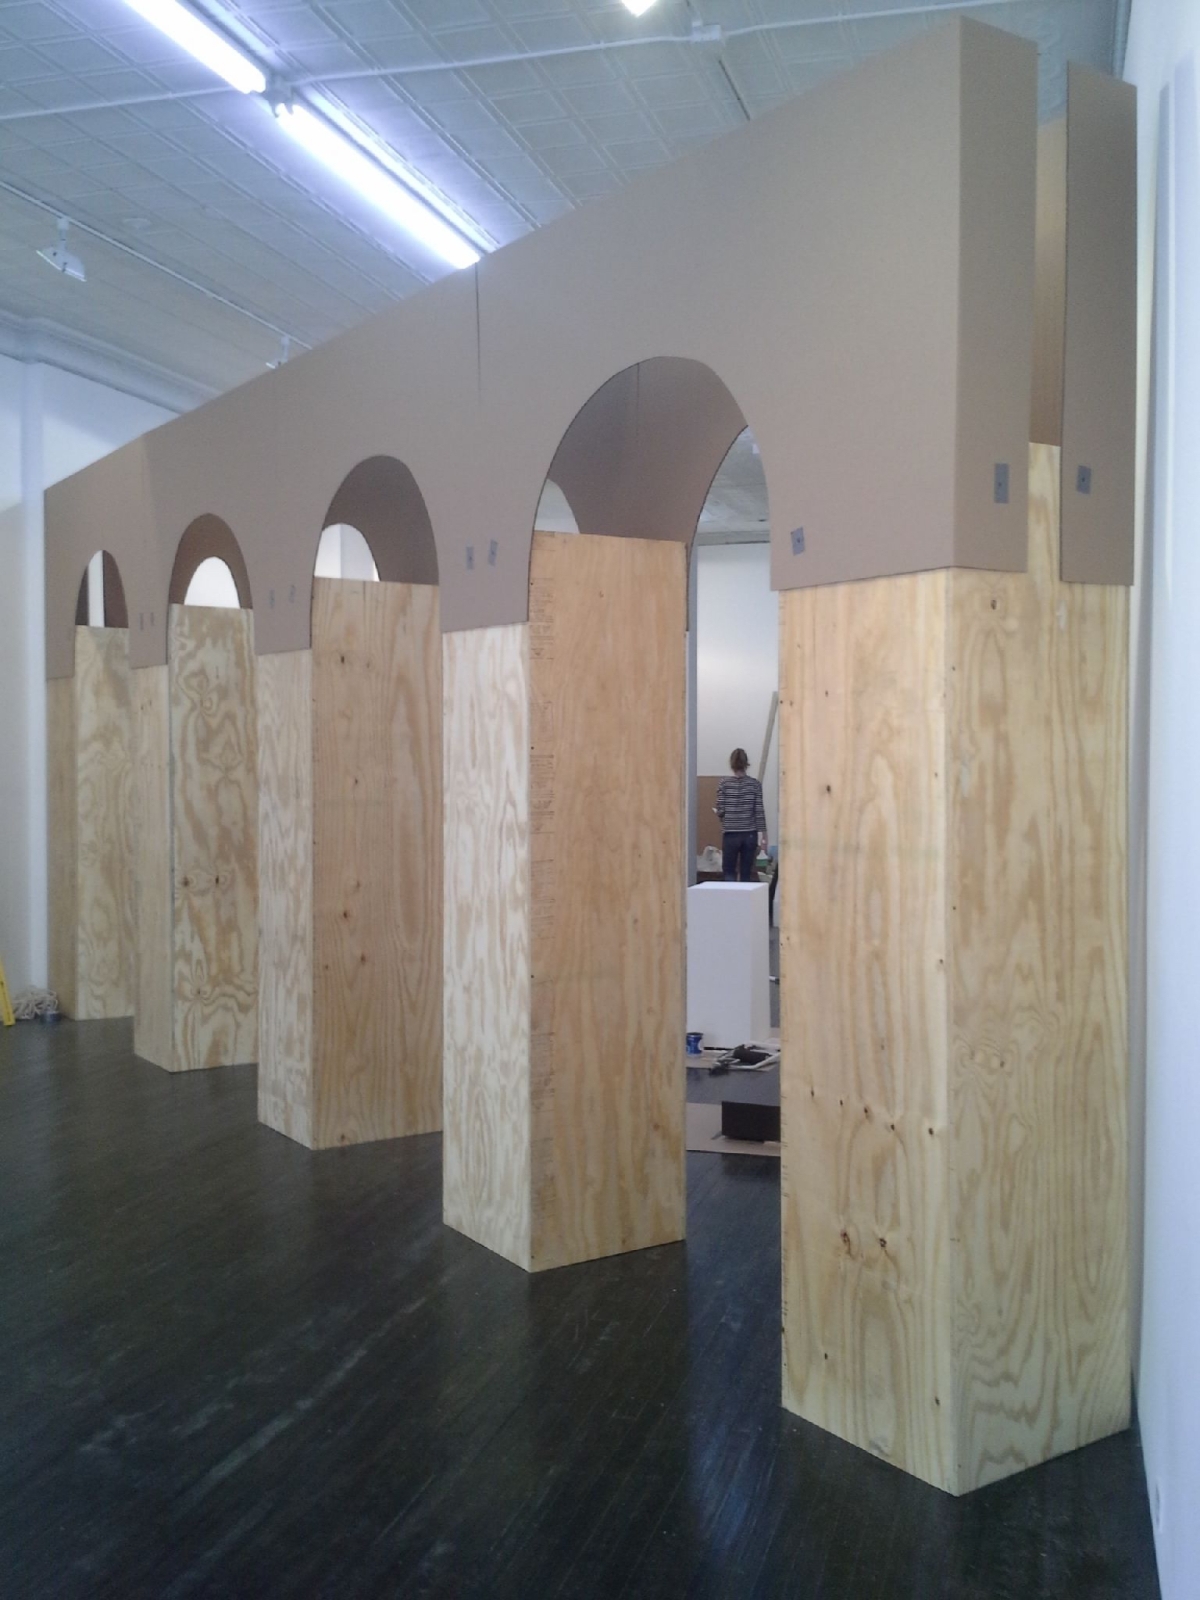 Adam Putnam
Untitled (Arcade), 2013-2015
plywood and cardboard
dimensions variable